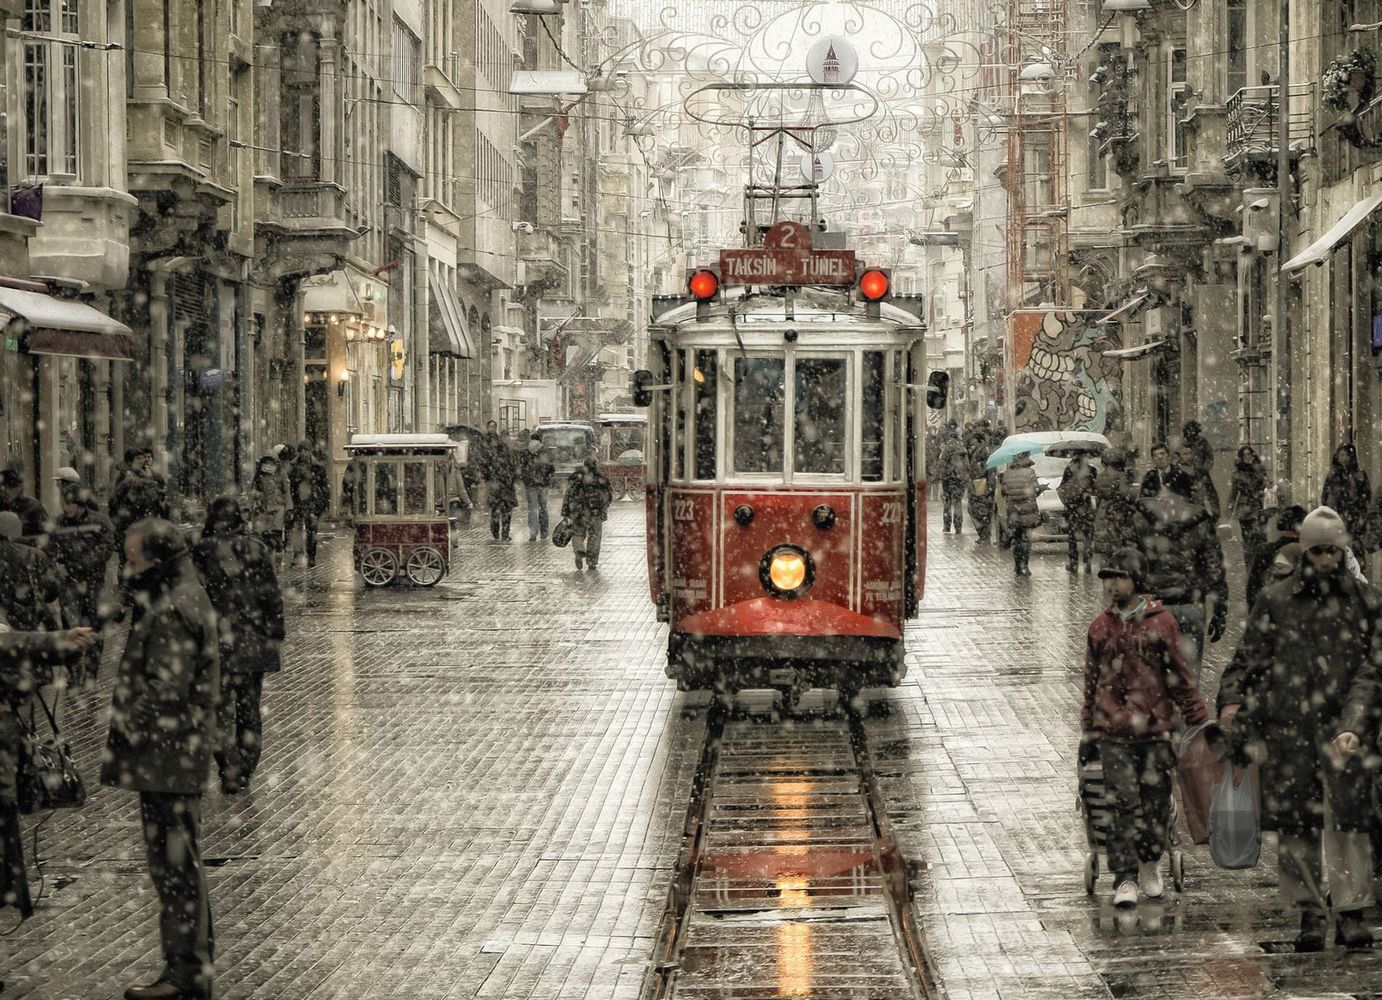 Tram Scene, Istanbul, Turkey. Cityscape wallpaper, Street scenes, Cityscape